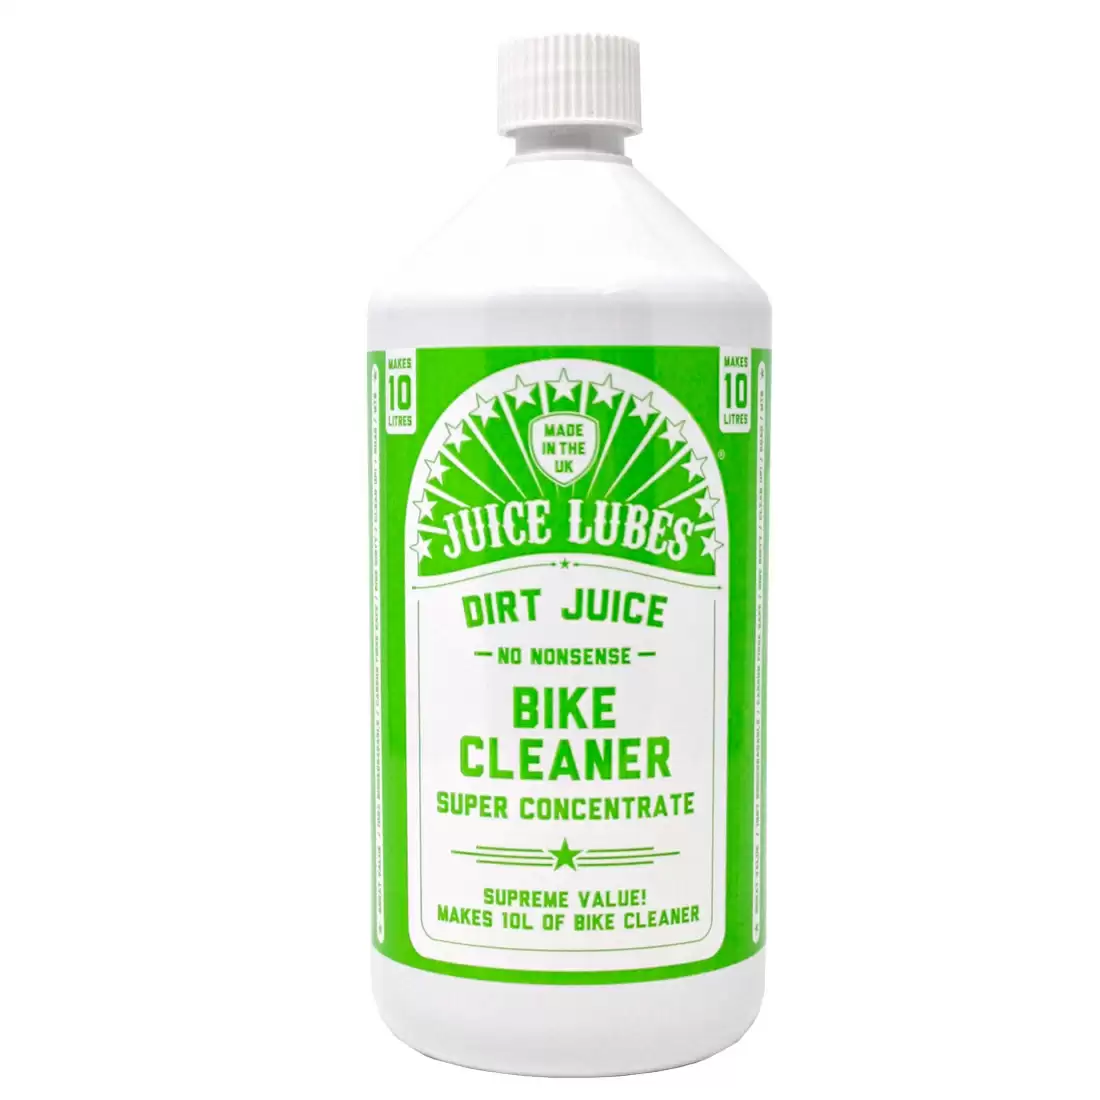 Detergente sgrassatore concentrato Dirt Juice Super 1lt - image